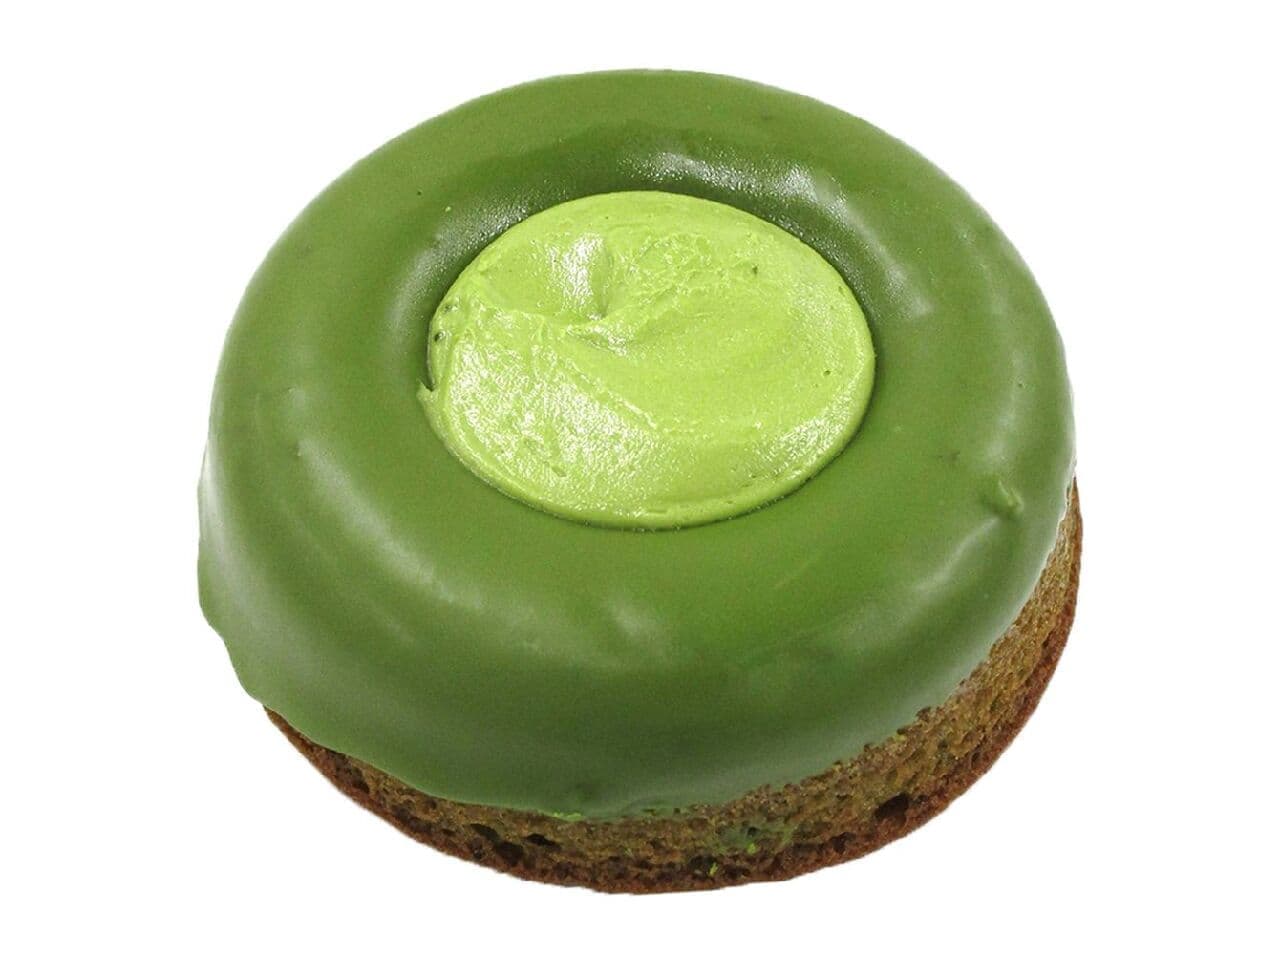 7-ELEVEN "Cake with Green Tea and Condensed Milk Cream